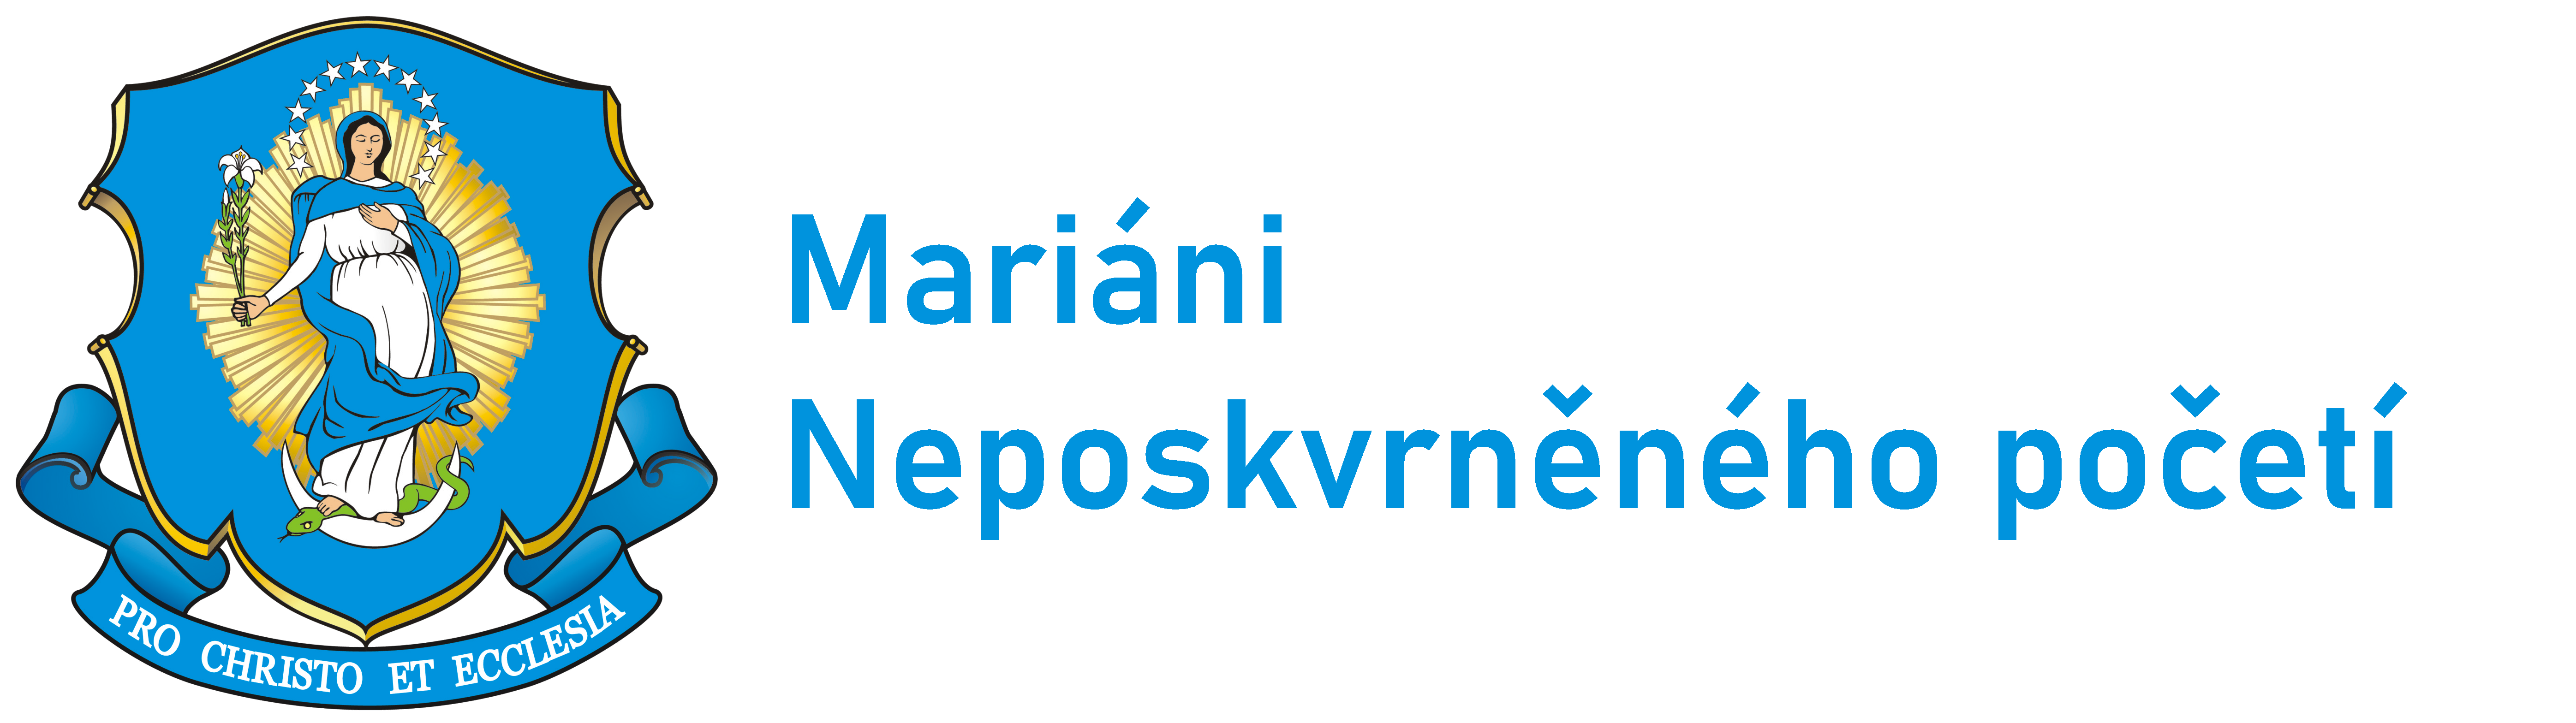 Logo Jubileum 350 let - Mariáni ČR